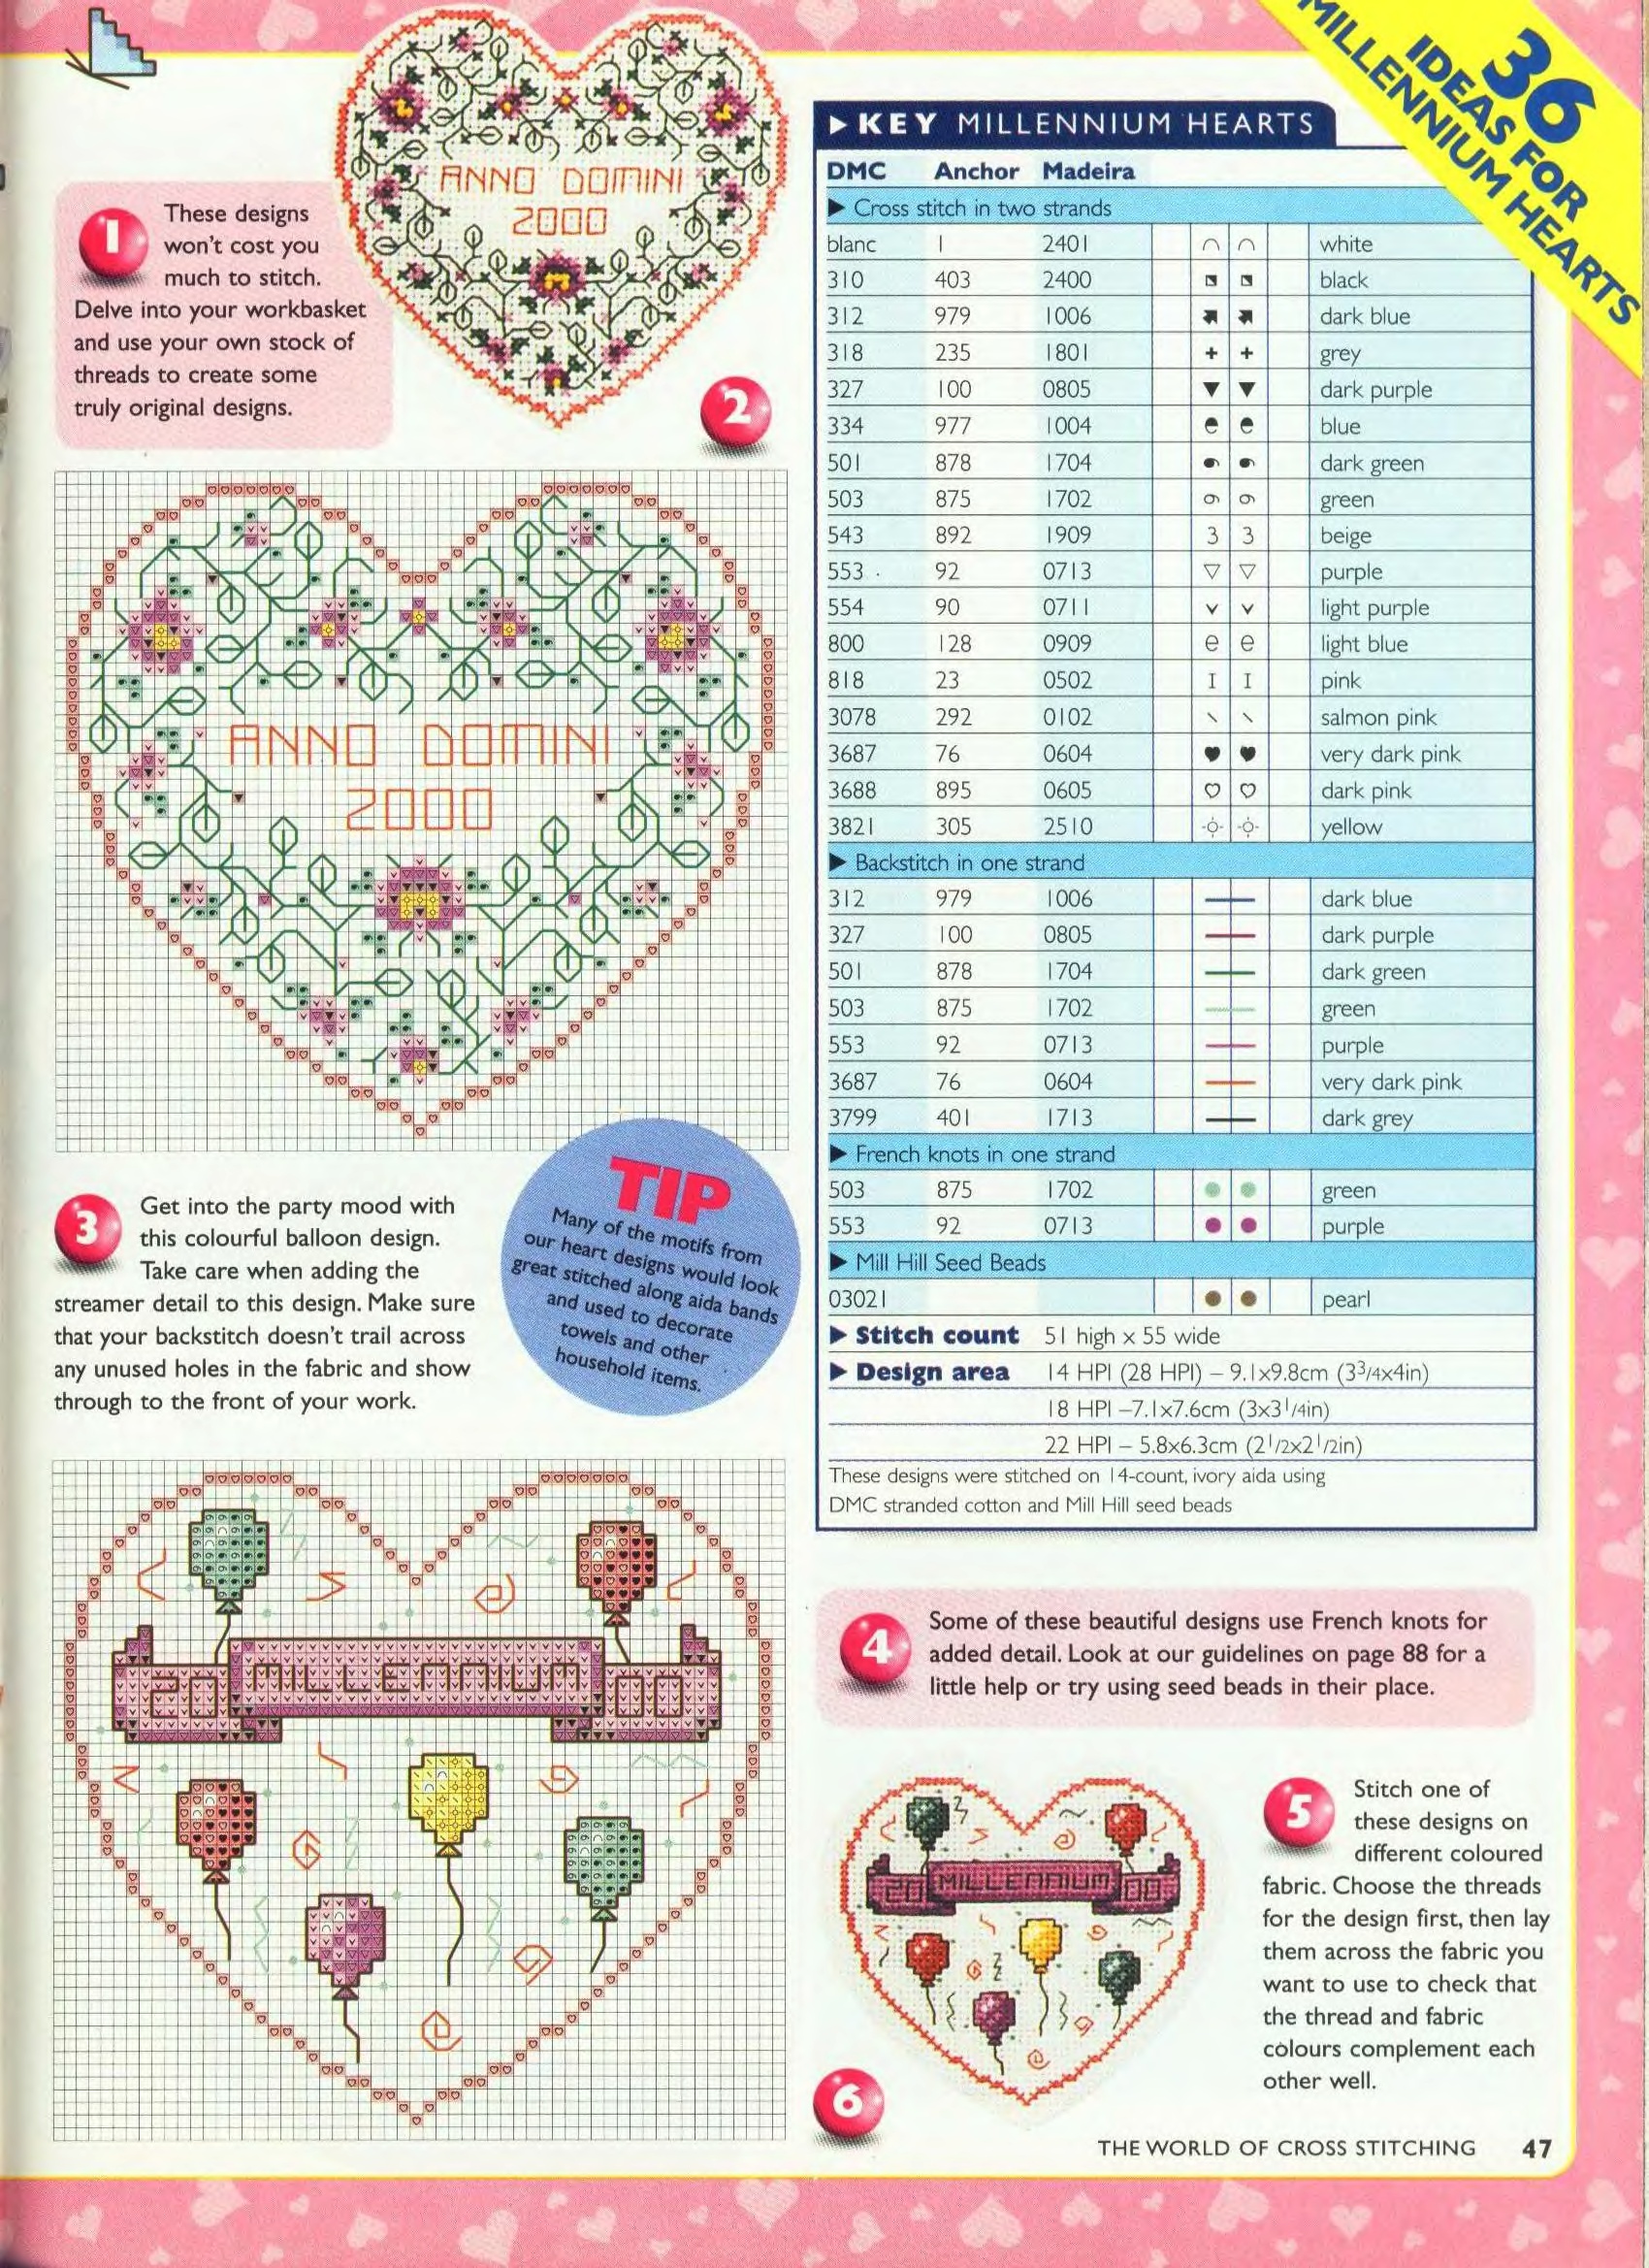 Millenium hearts ideas cross stitch pattern (2)